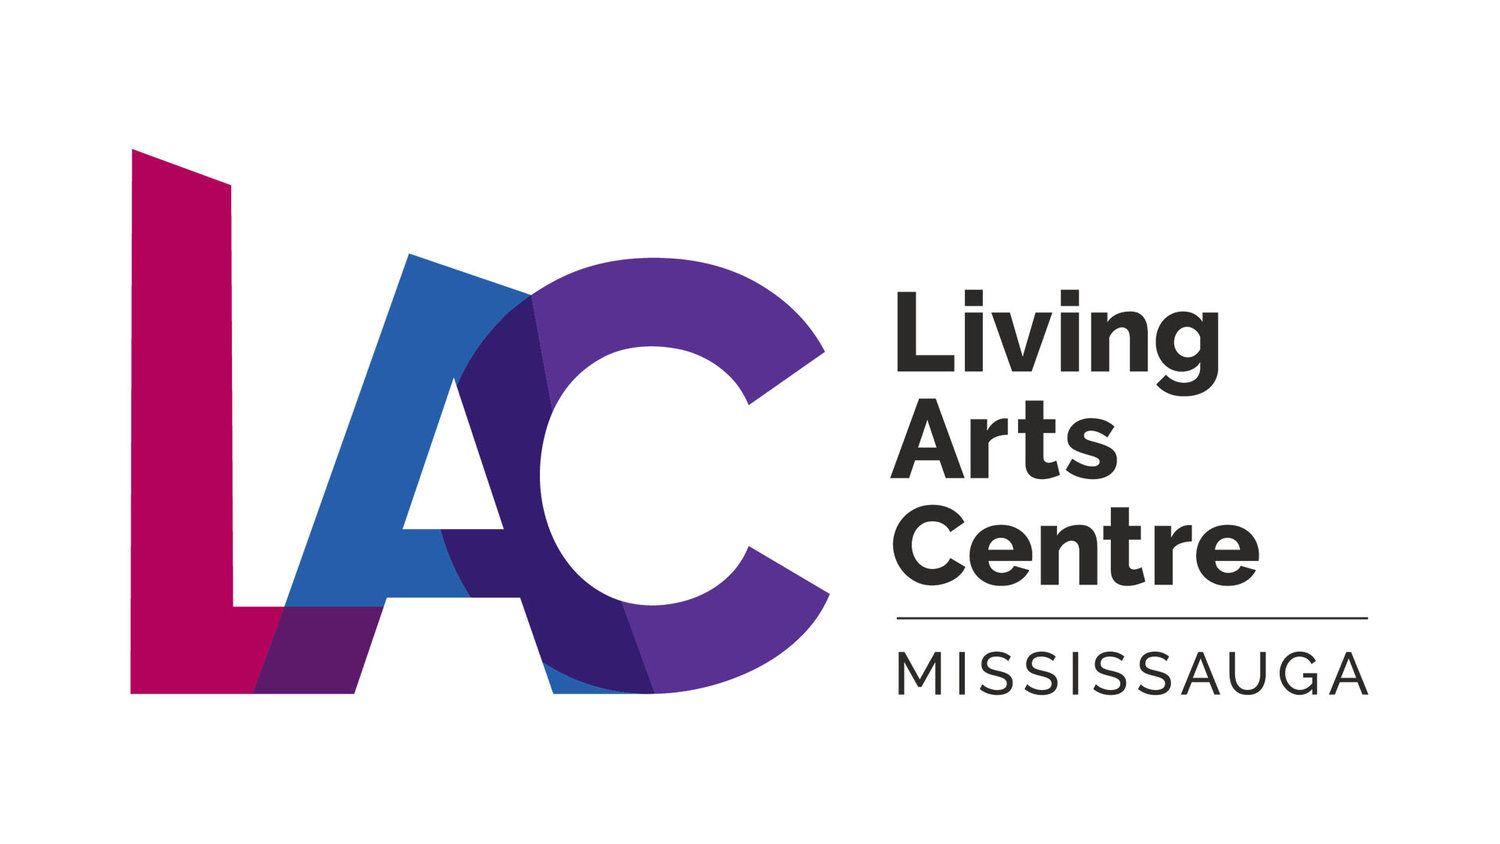 Lac Logo - The Living Arts Centre's new logo